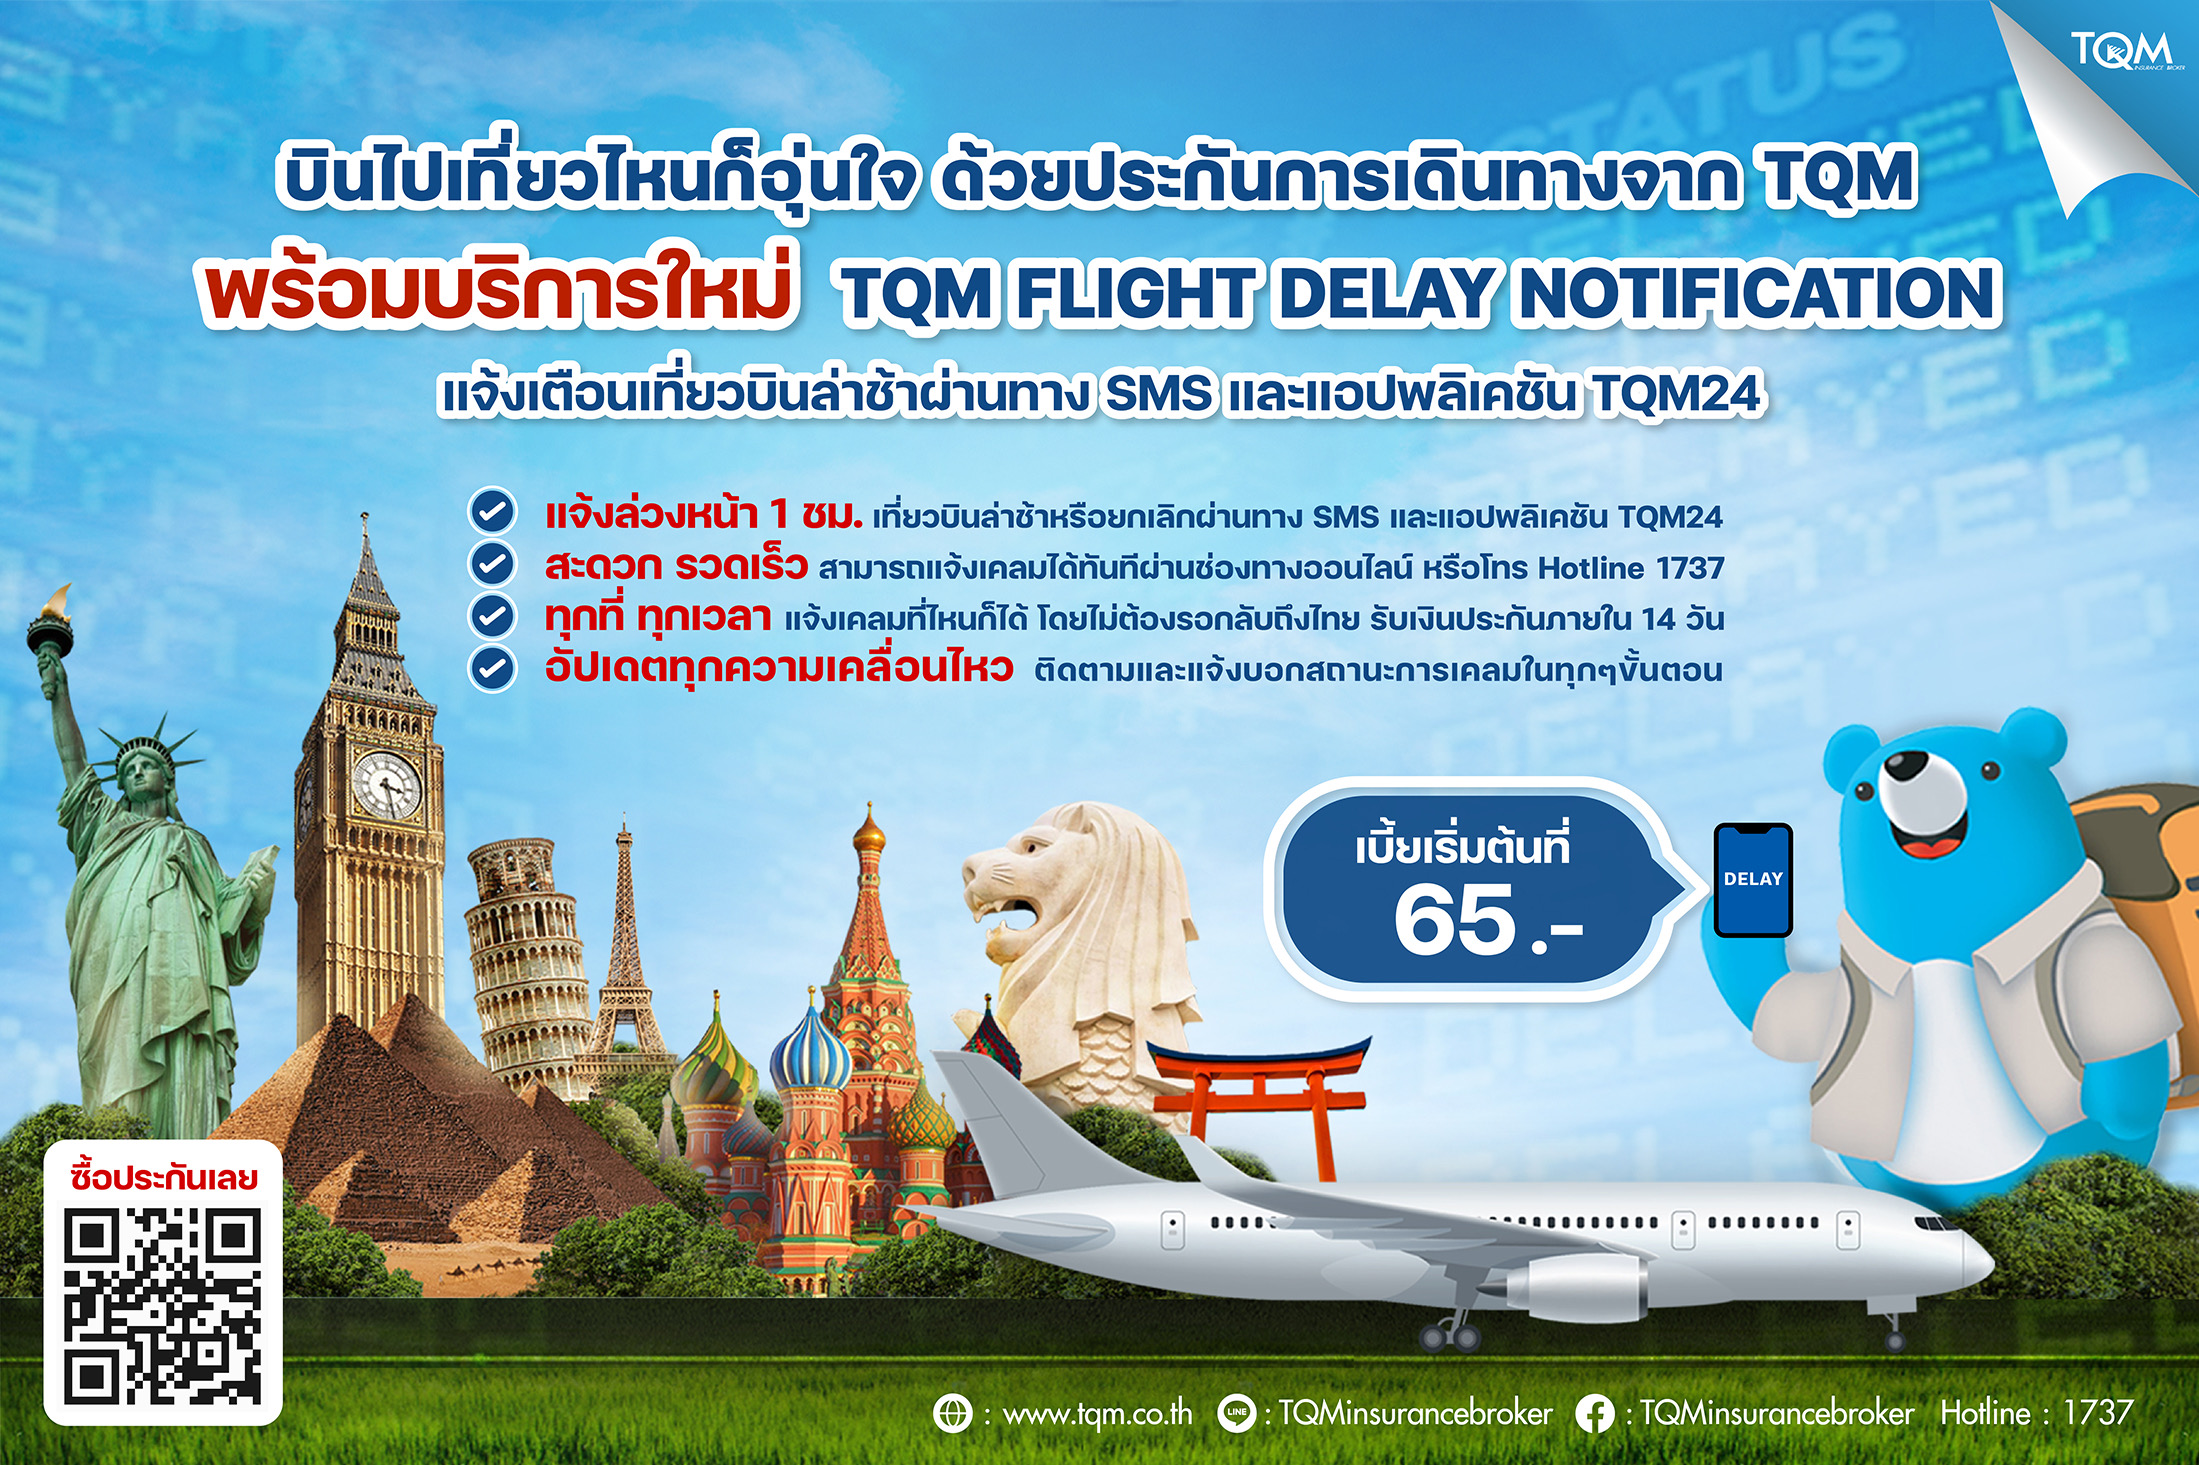 TQMมอบประสบการณ์ใหม่การเดินทางท่องเที่ยวกับ ‘TQM Flight Delay Notification’ แจ้งเตือนเที่ยวบินล่าช้า พร้อมเคลมประกันเดินทางผ่านแอปฯ TQM24 ทันที